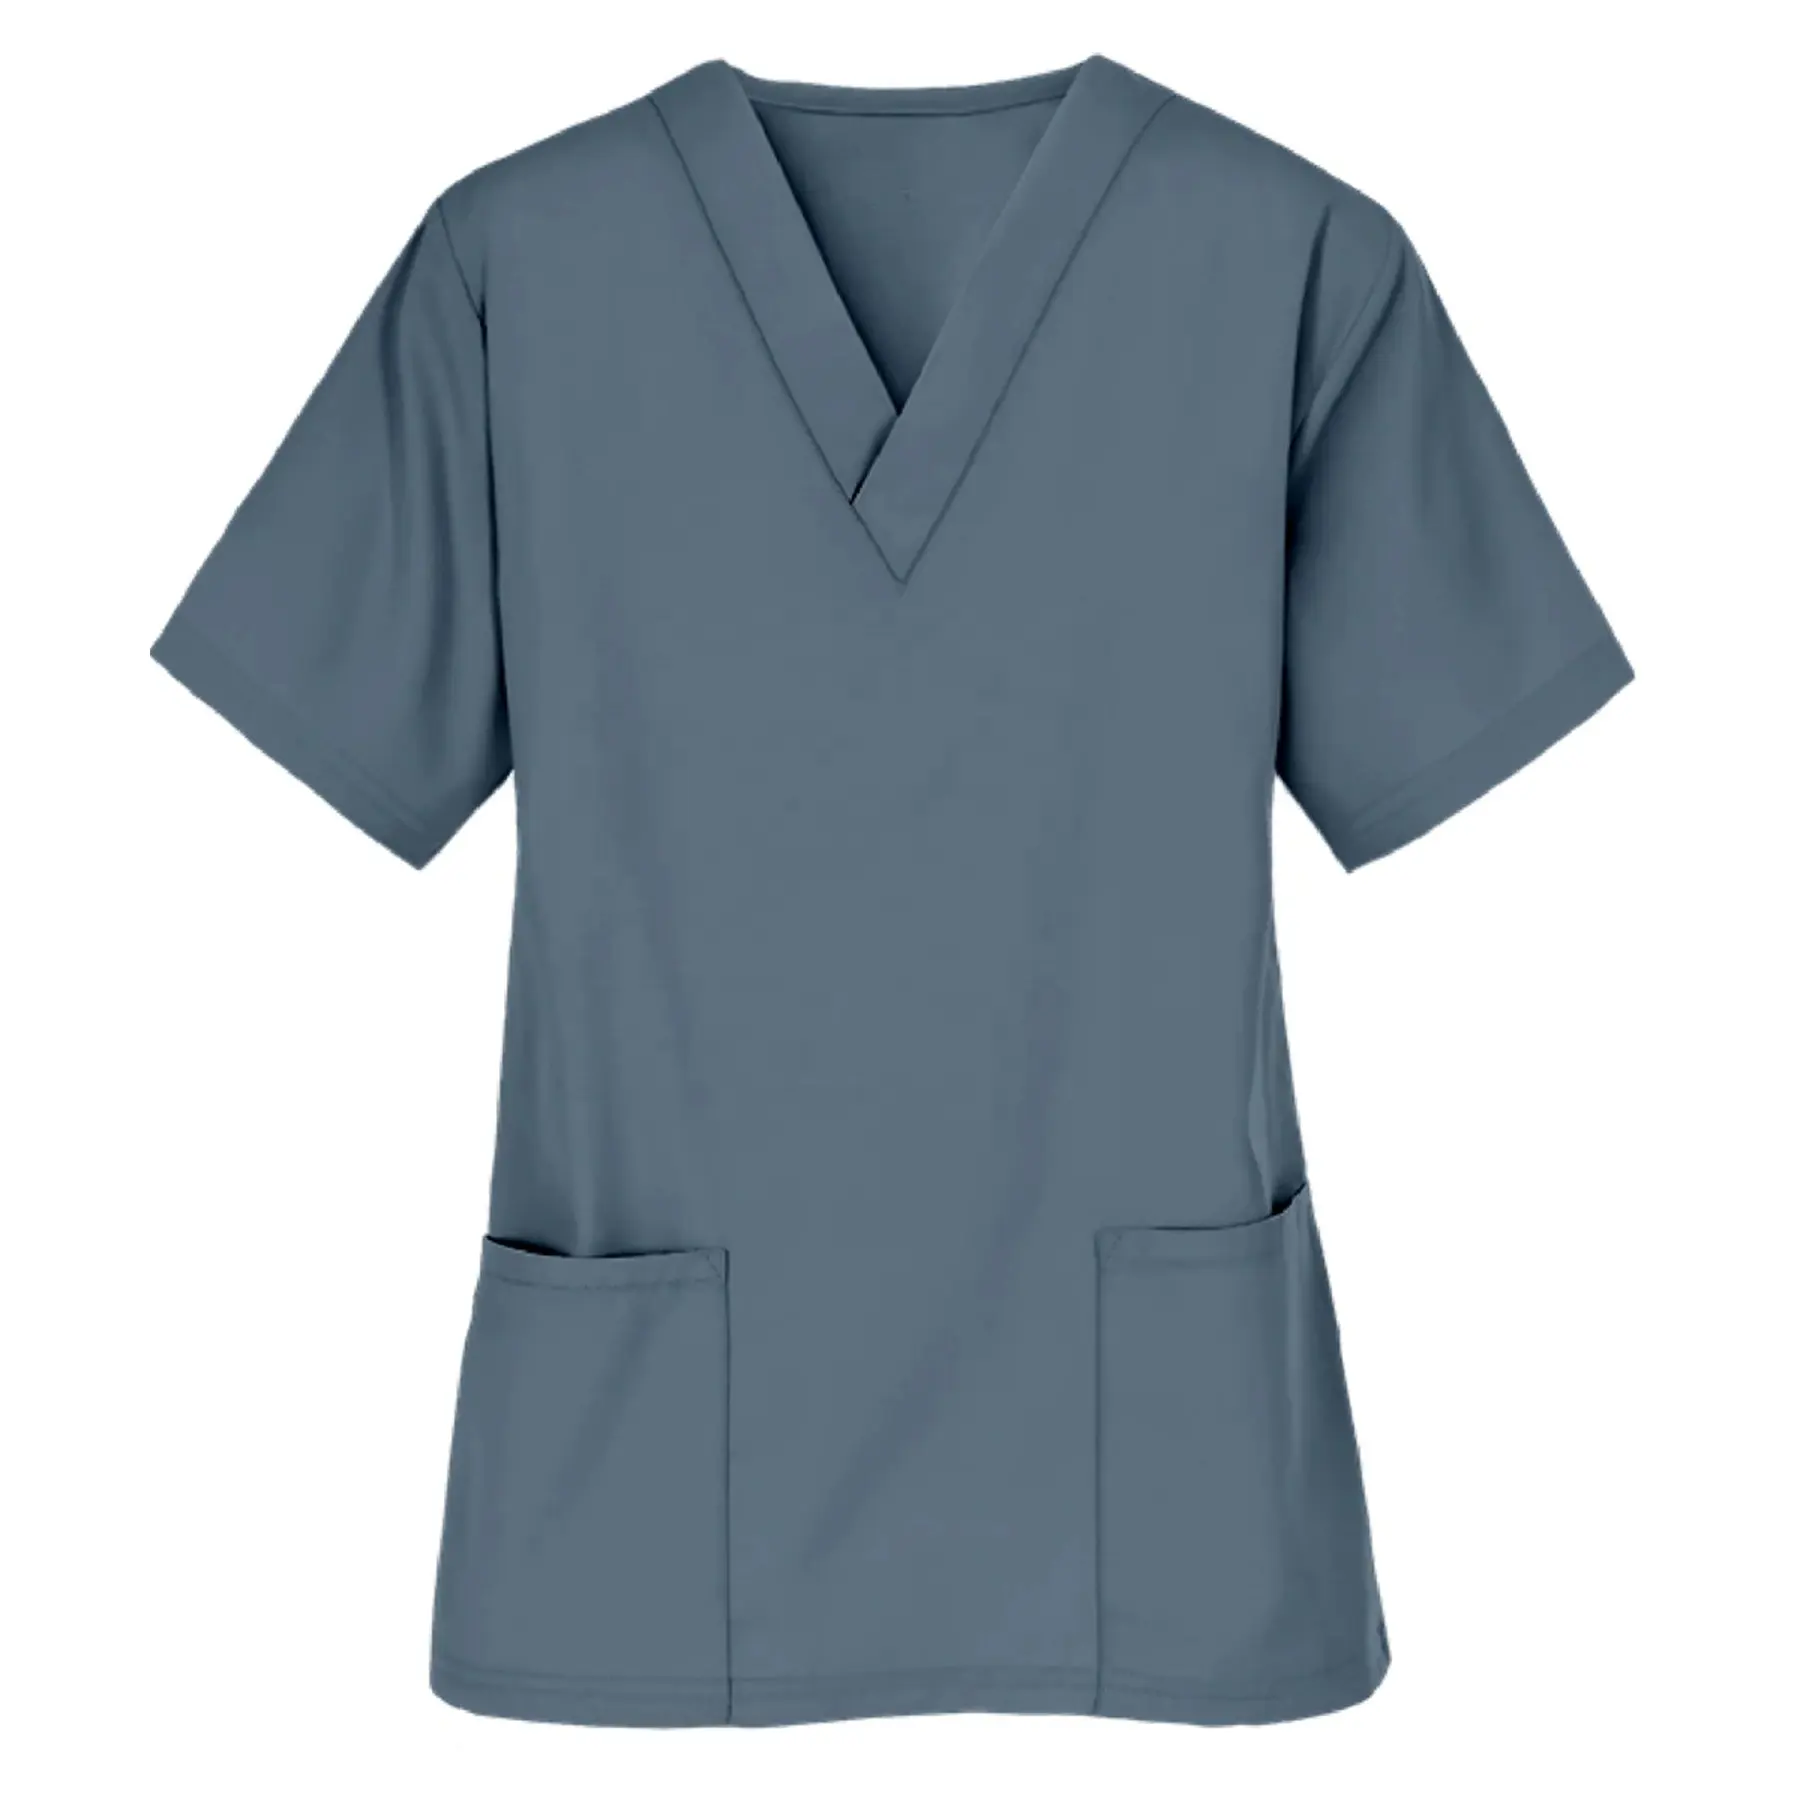 Hot Sale New Designs 3 Pockets Medical Nurse Scrub Uniforms for Hospital Staff Top Clothing Black Print Cotton